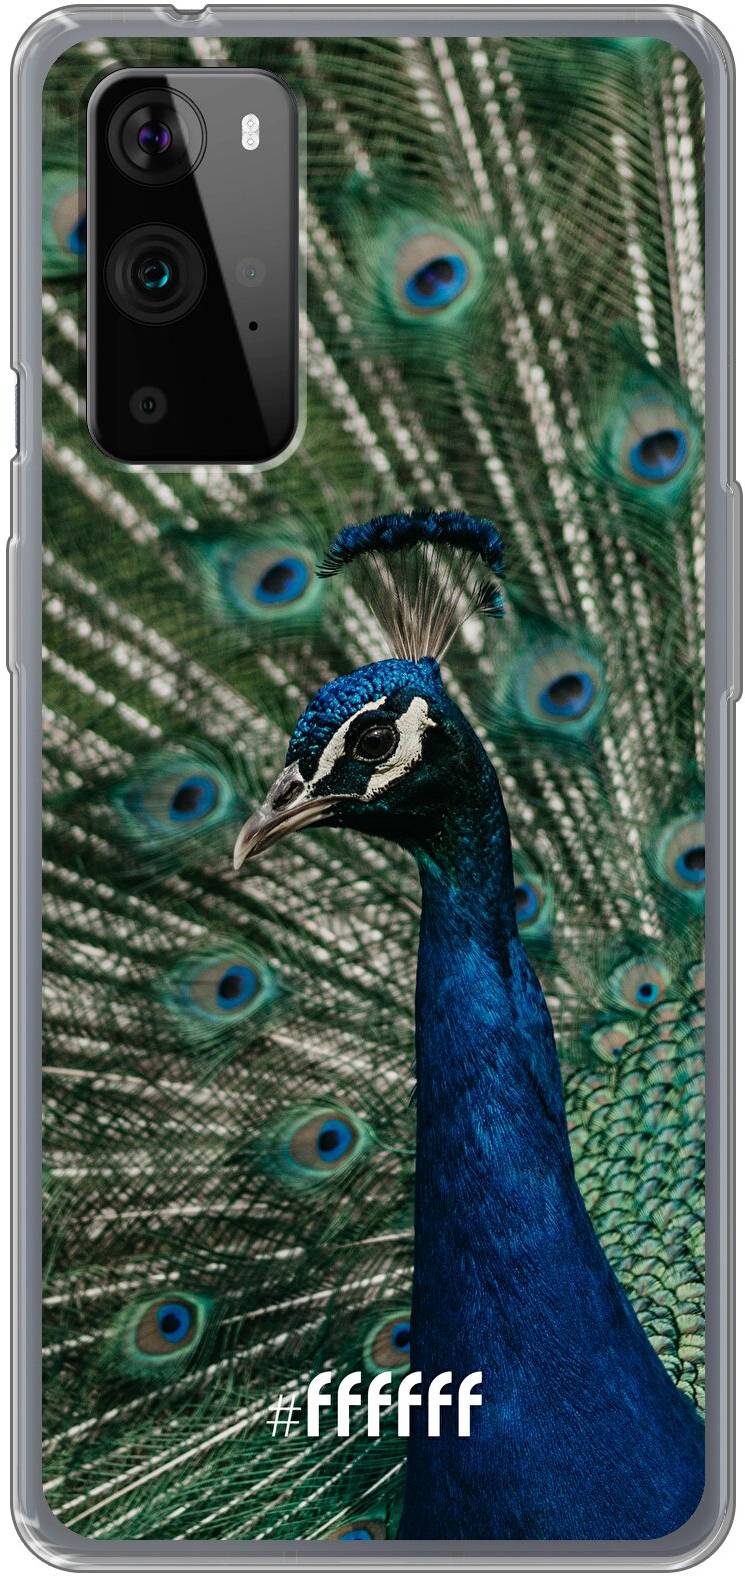 Peacock 9 Pro